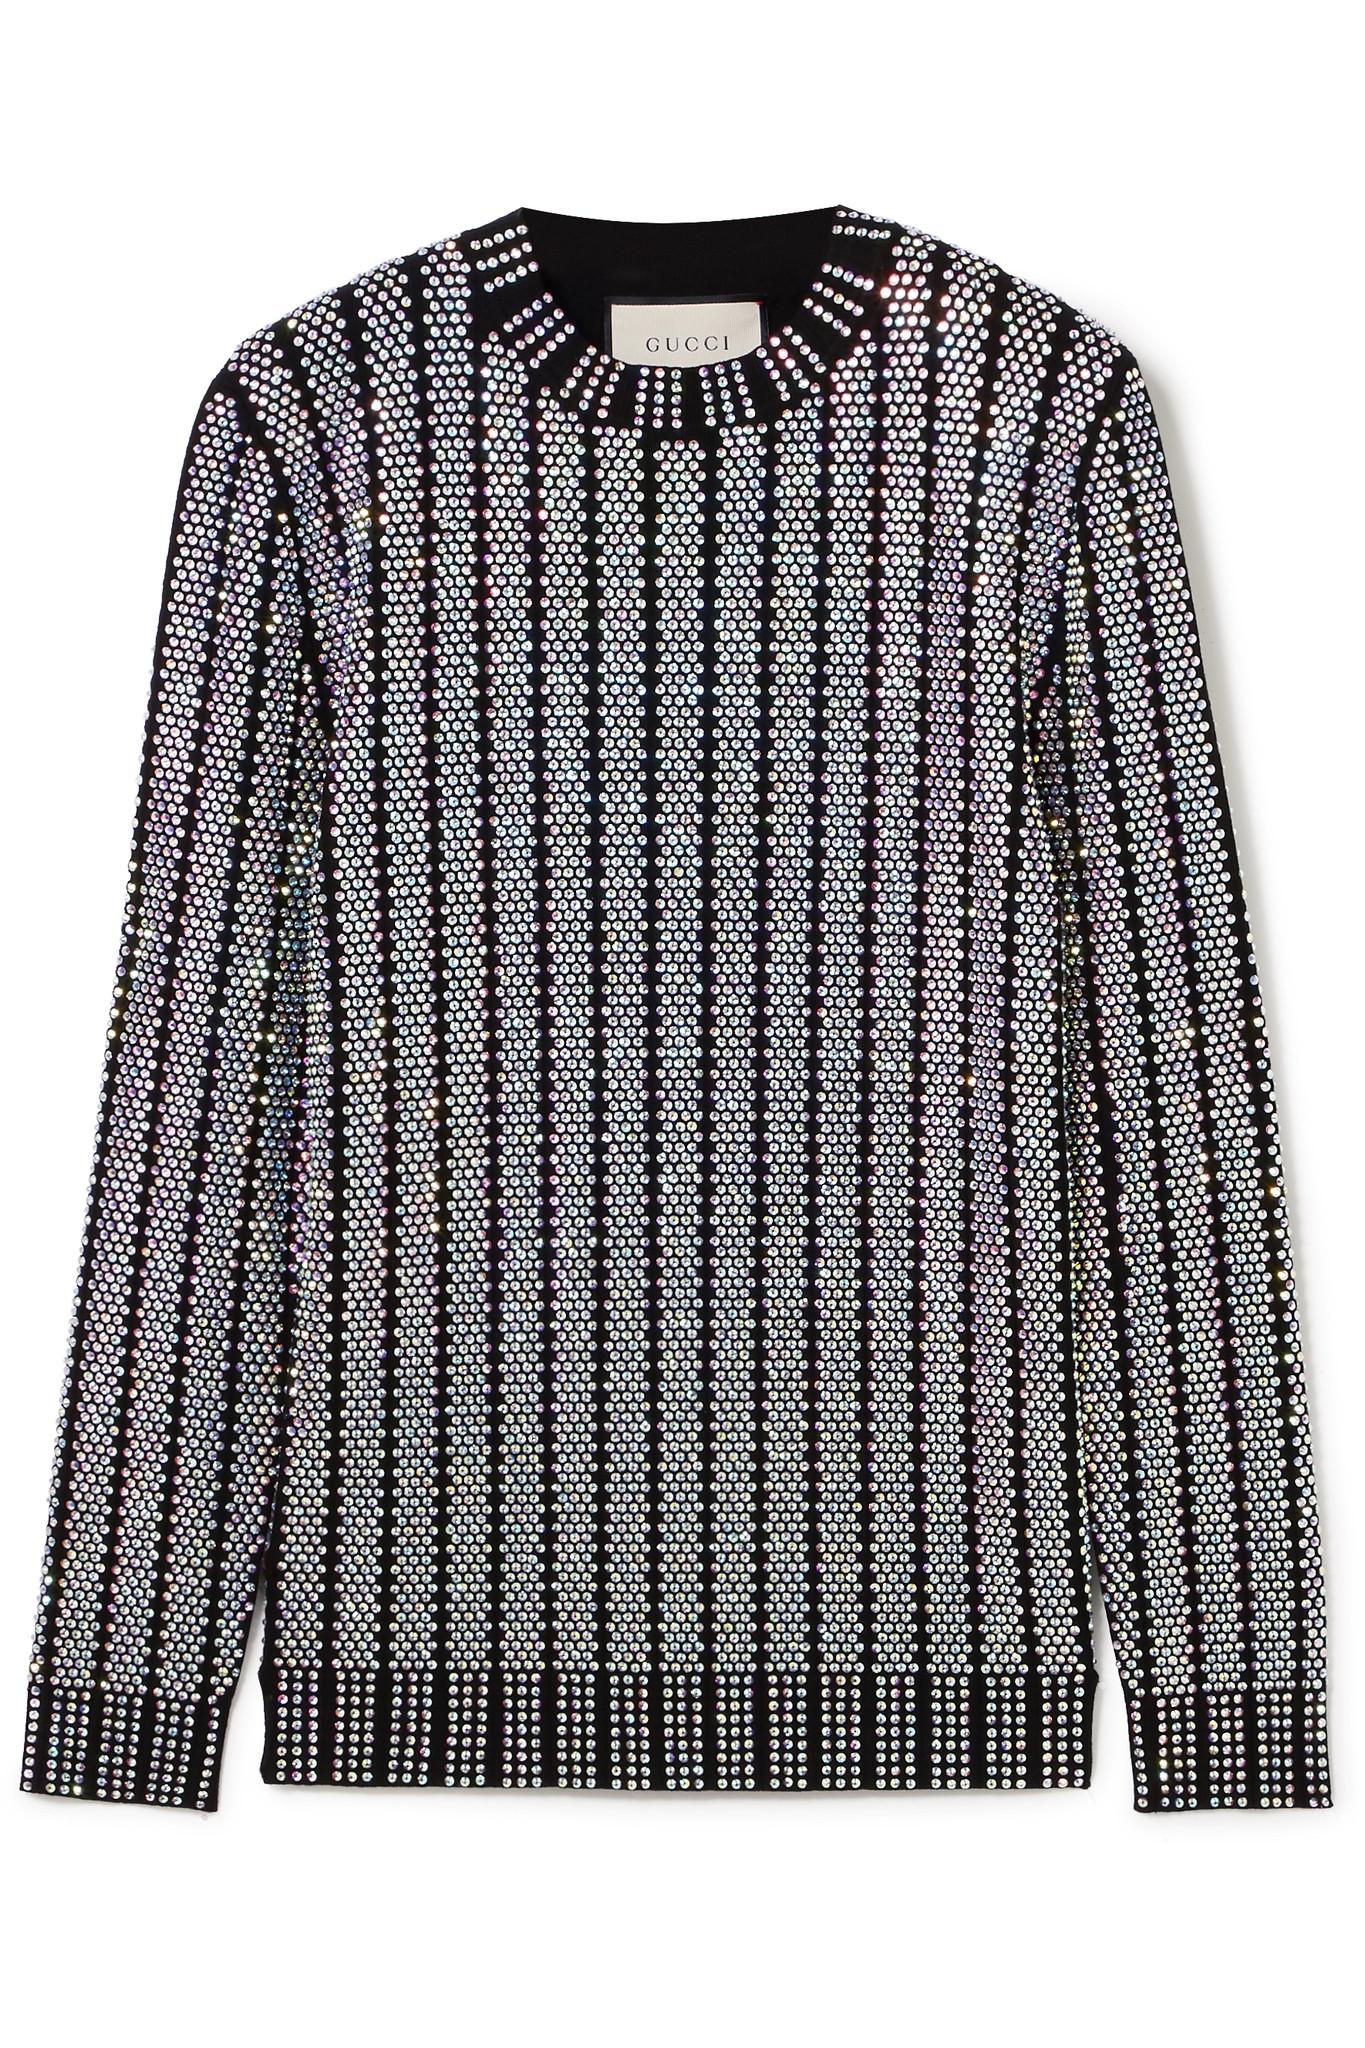 Gucci Denim Crystal-embellished Stretch-knit Sweater in Black | Lyst